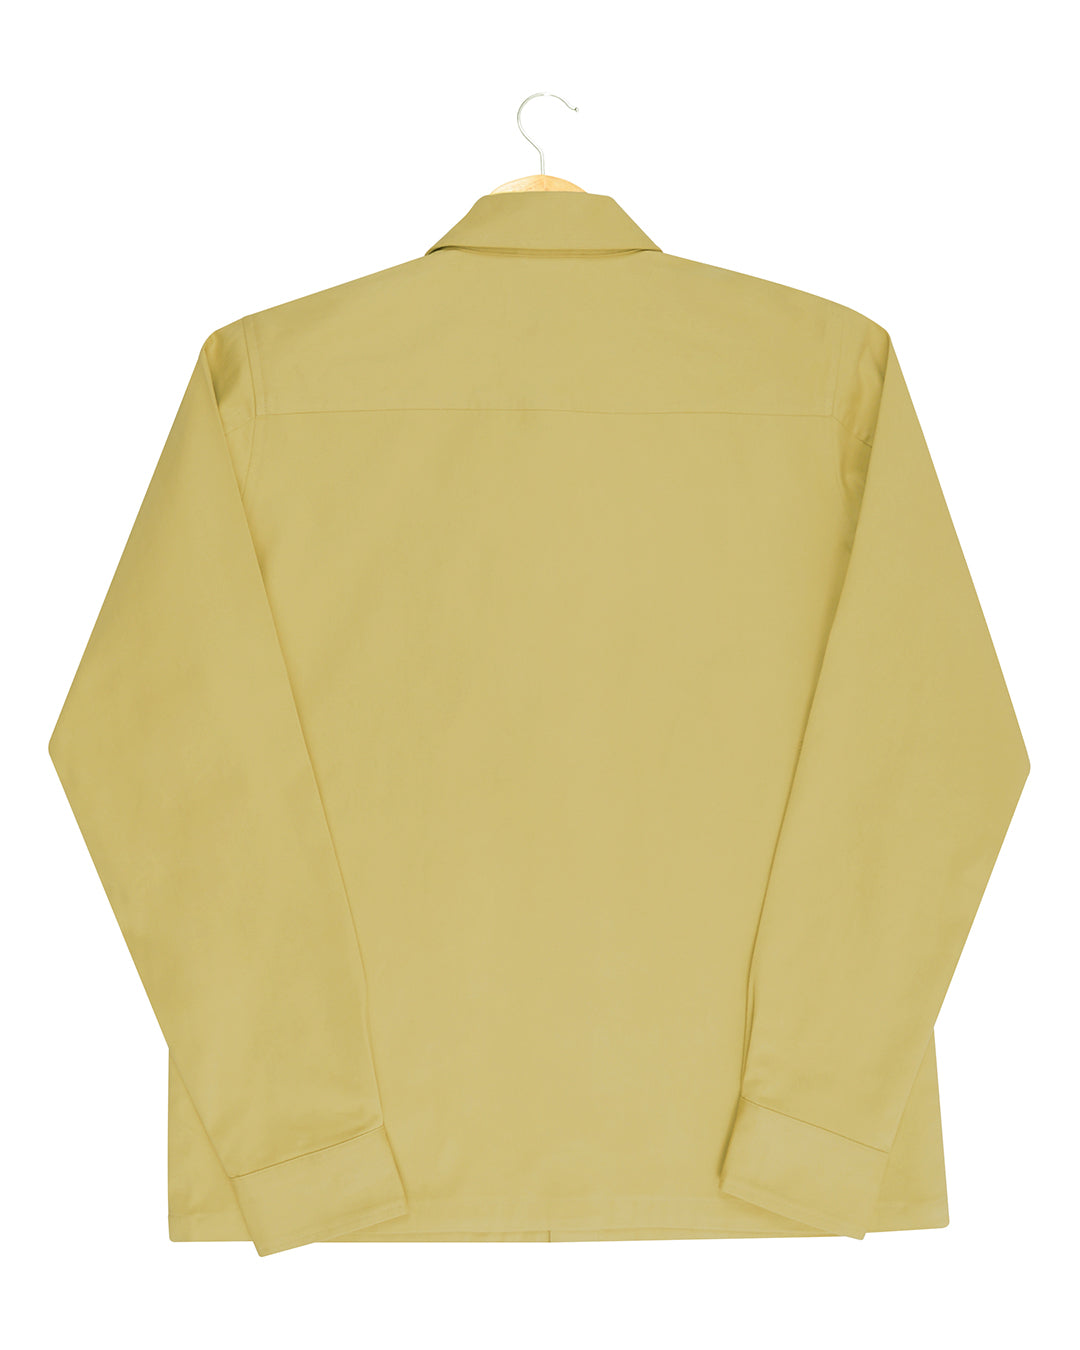 Mellow Mustard Soft Twill Jacket